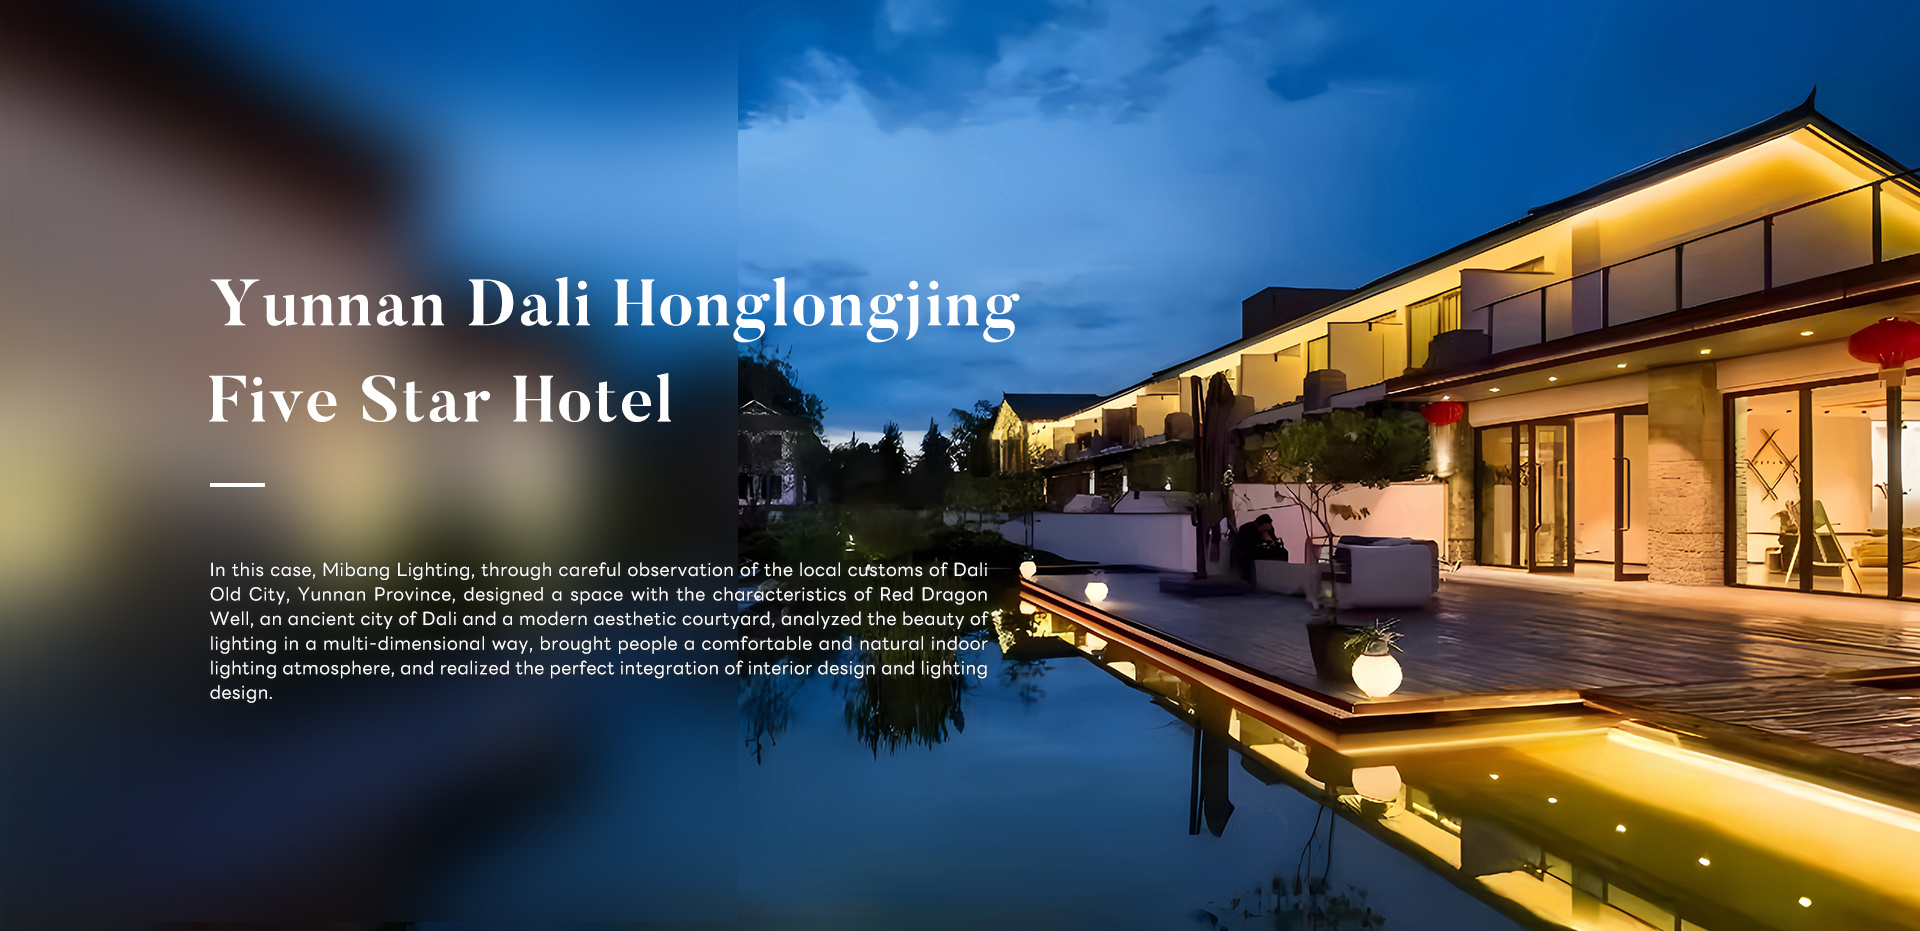 Yunnan Dali Honglongjing Five Star Hotel